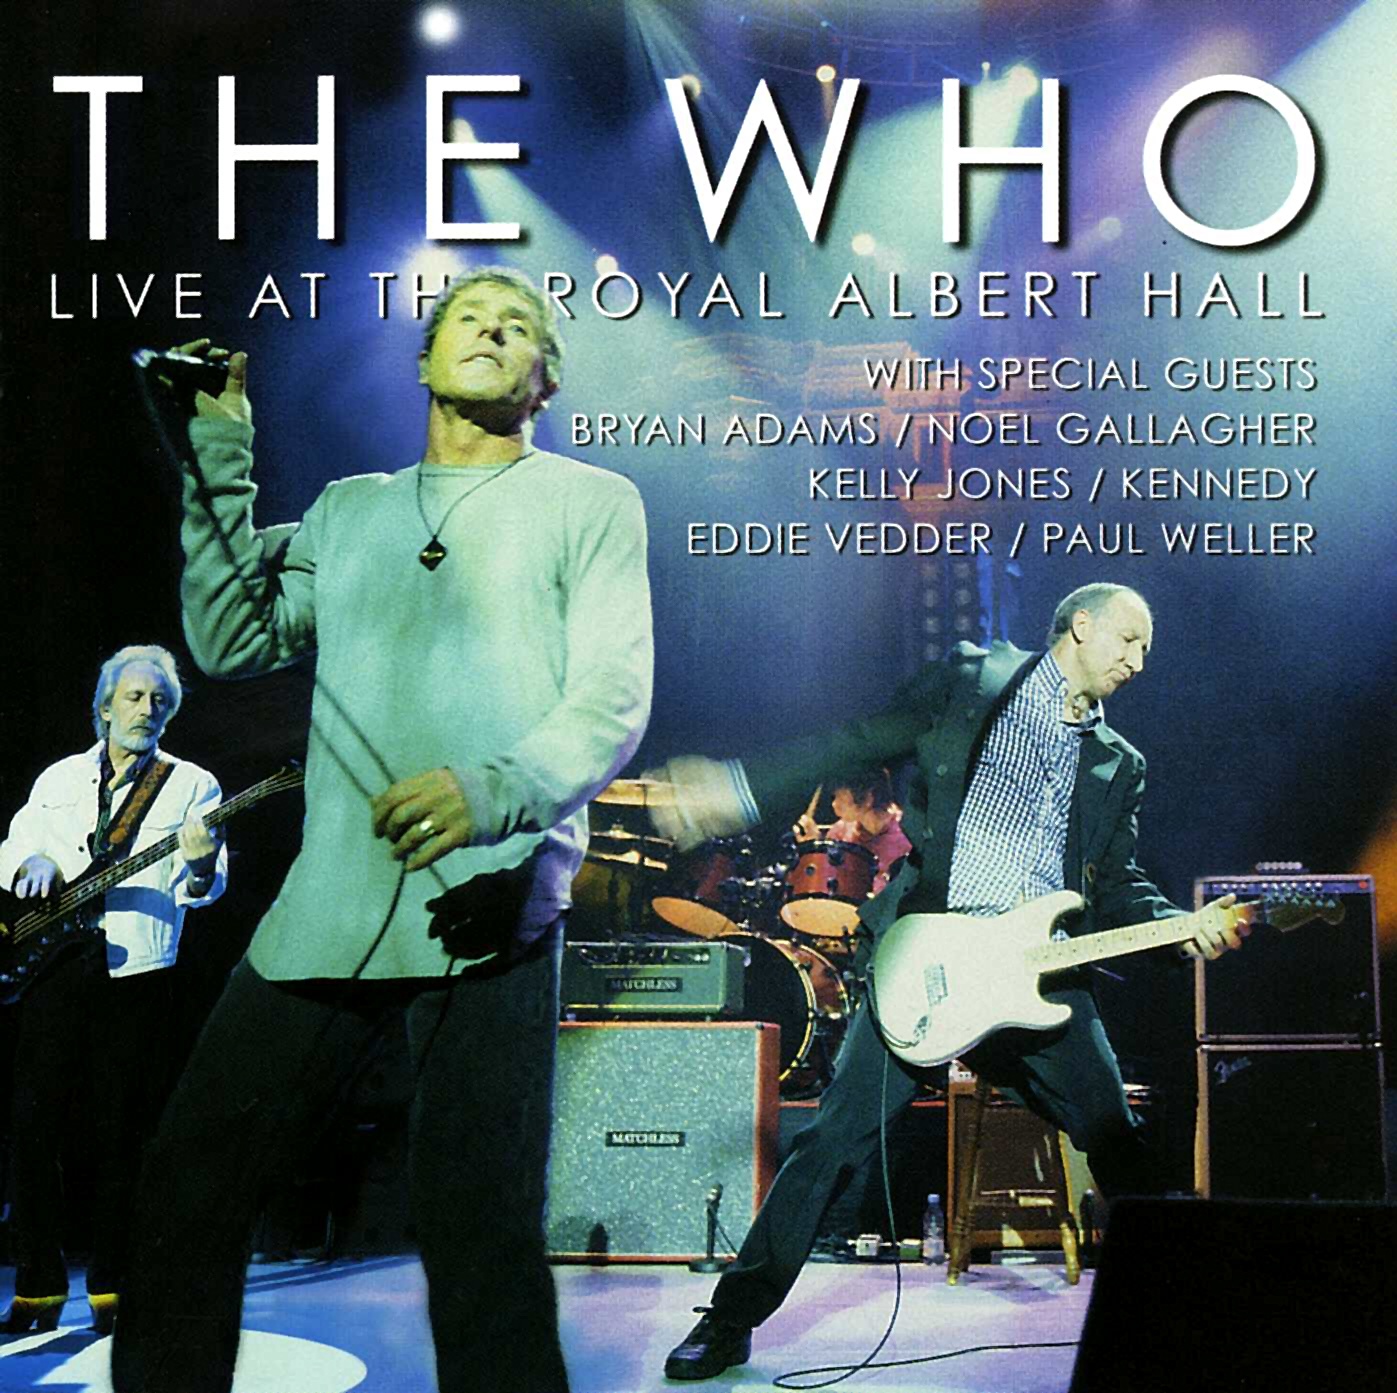 The Who-live at the royal albert hall [2003]